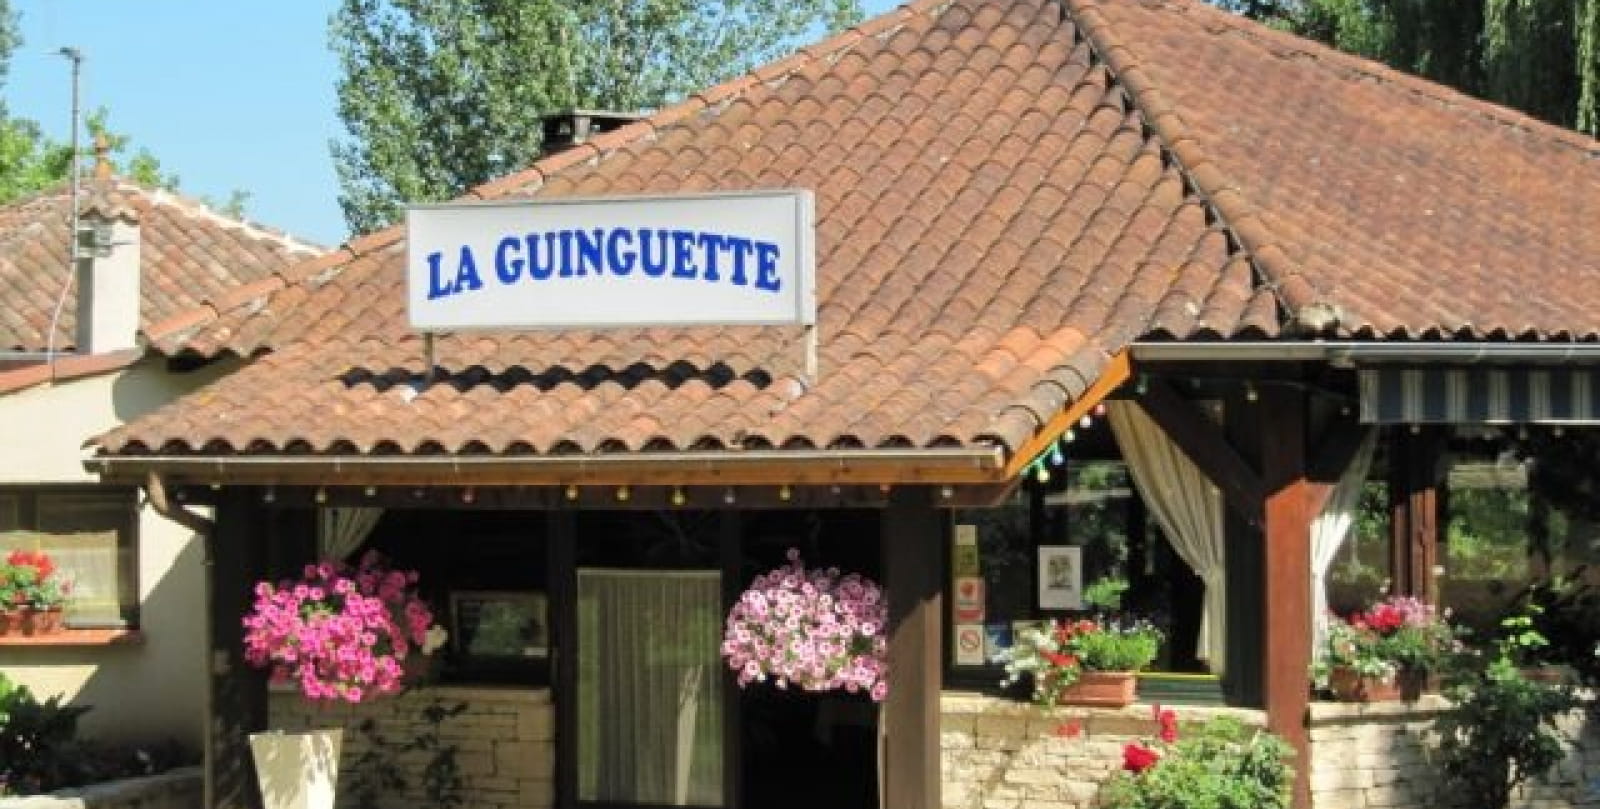 The Guinguette